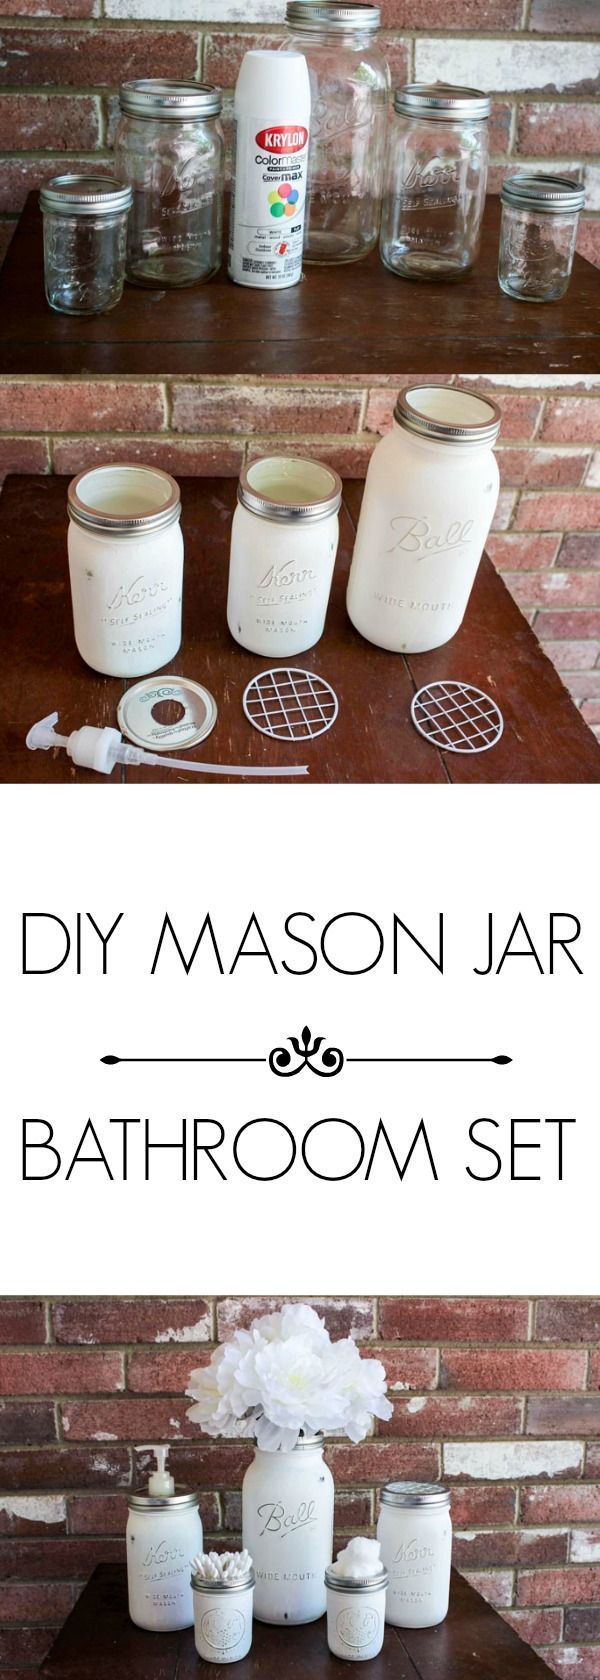 DIY Mason Jar Bathroom Set - DIY Mason Jar Bathroom Set -   17 diy Bathroom mason jars ideas